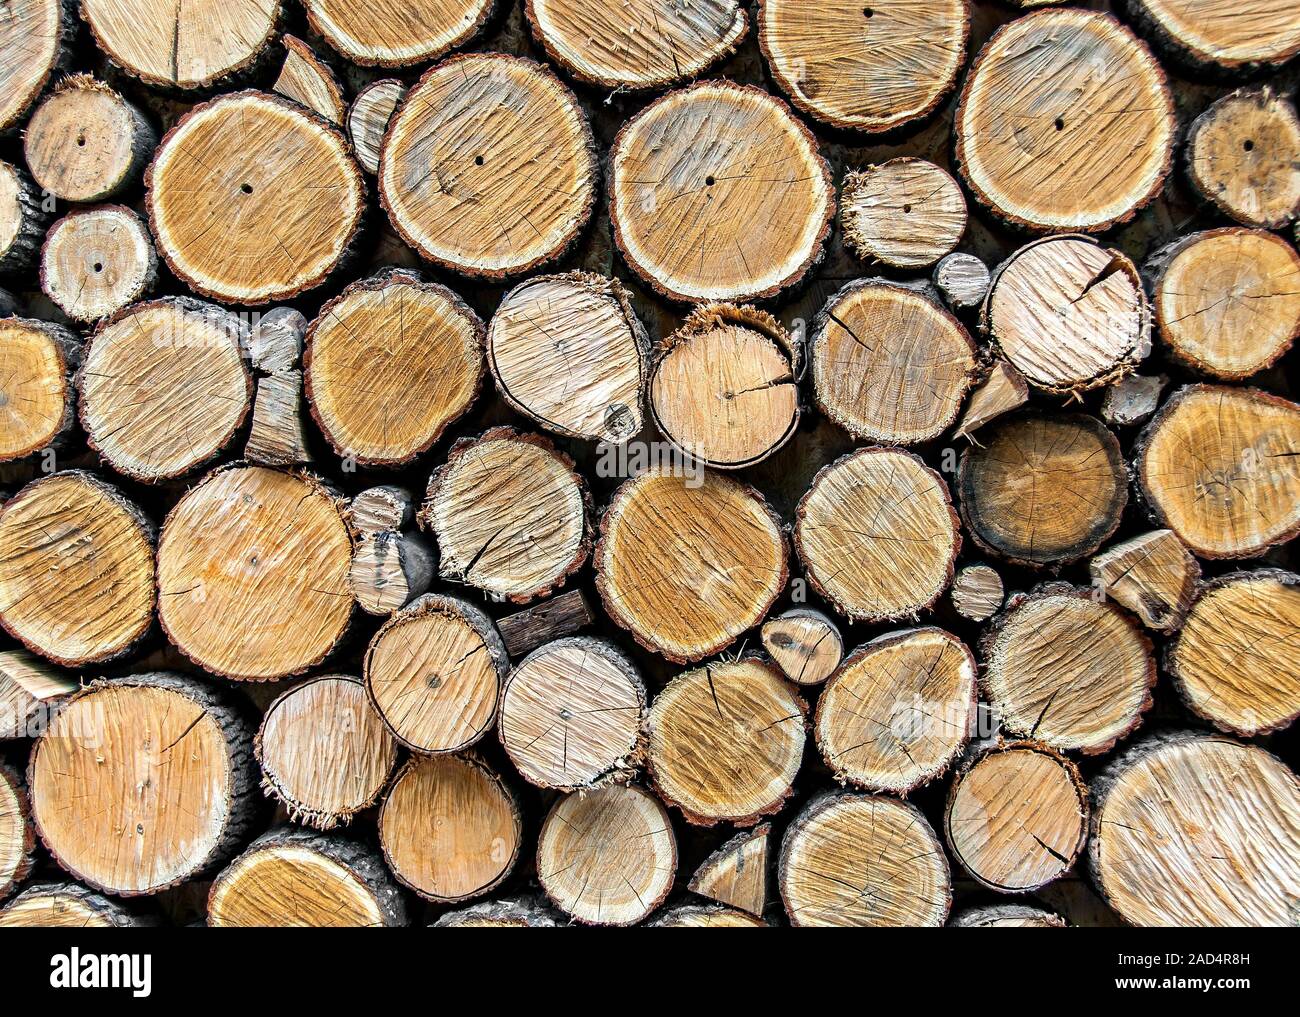 Stacked Wood Logs [IMAGE]  EurekAlert! Science News Releases